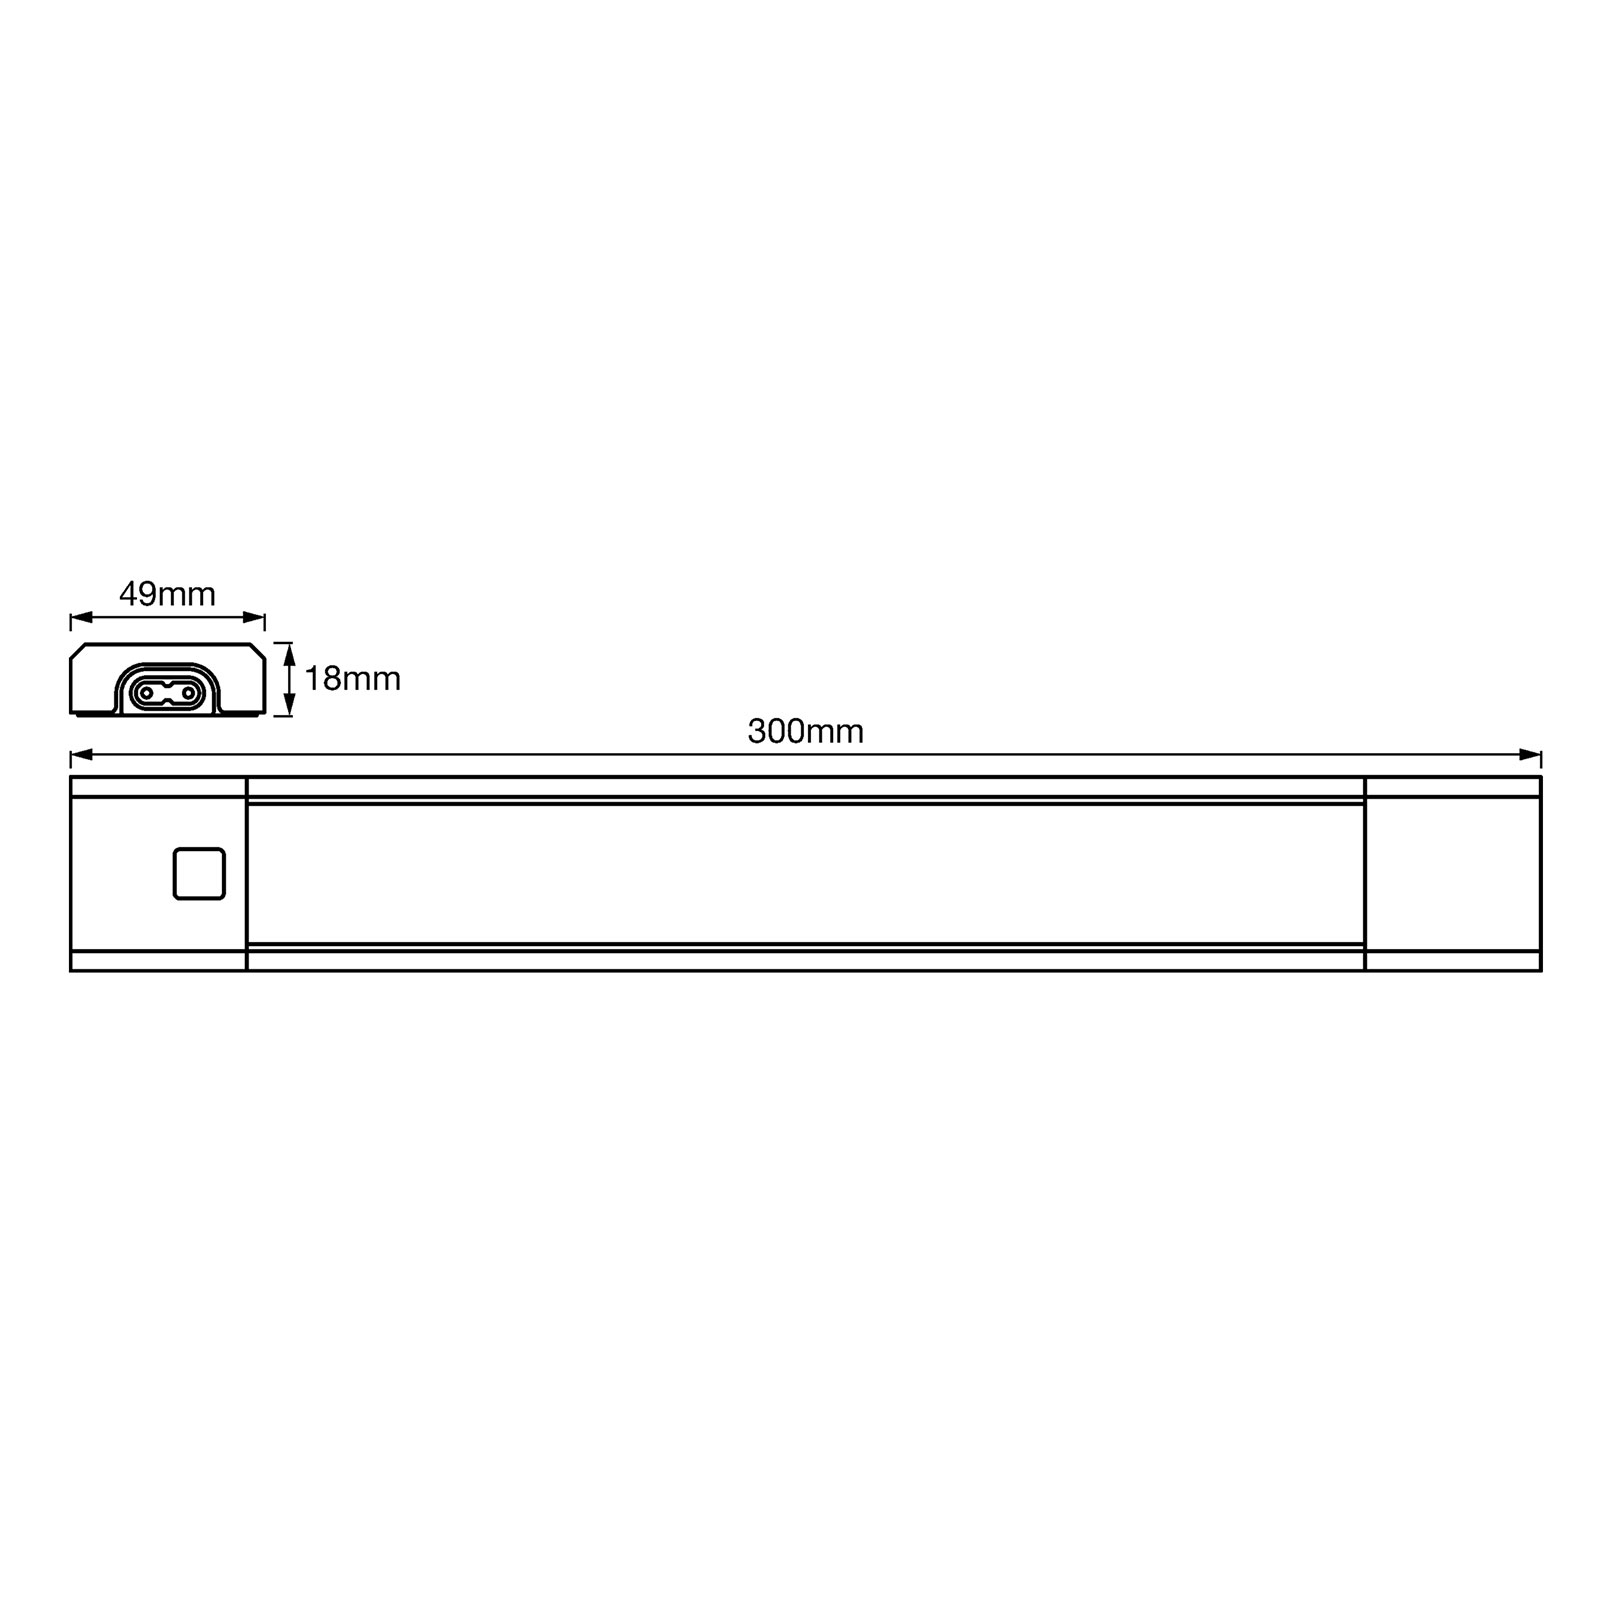 LEDVANCE Linear Slim RGBW under-cabinet light 30cm